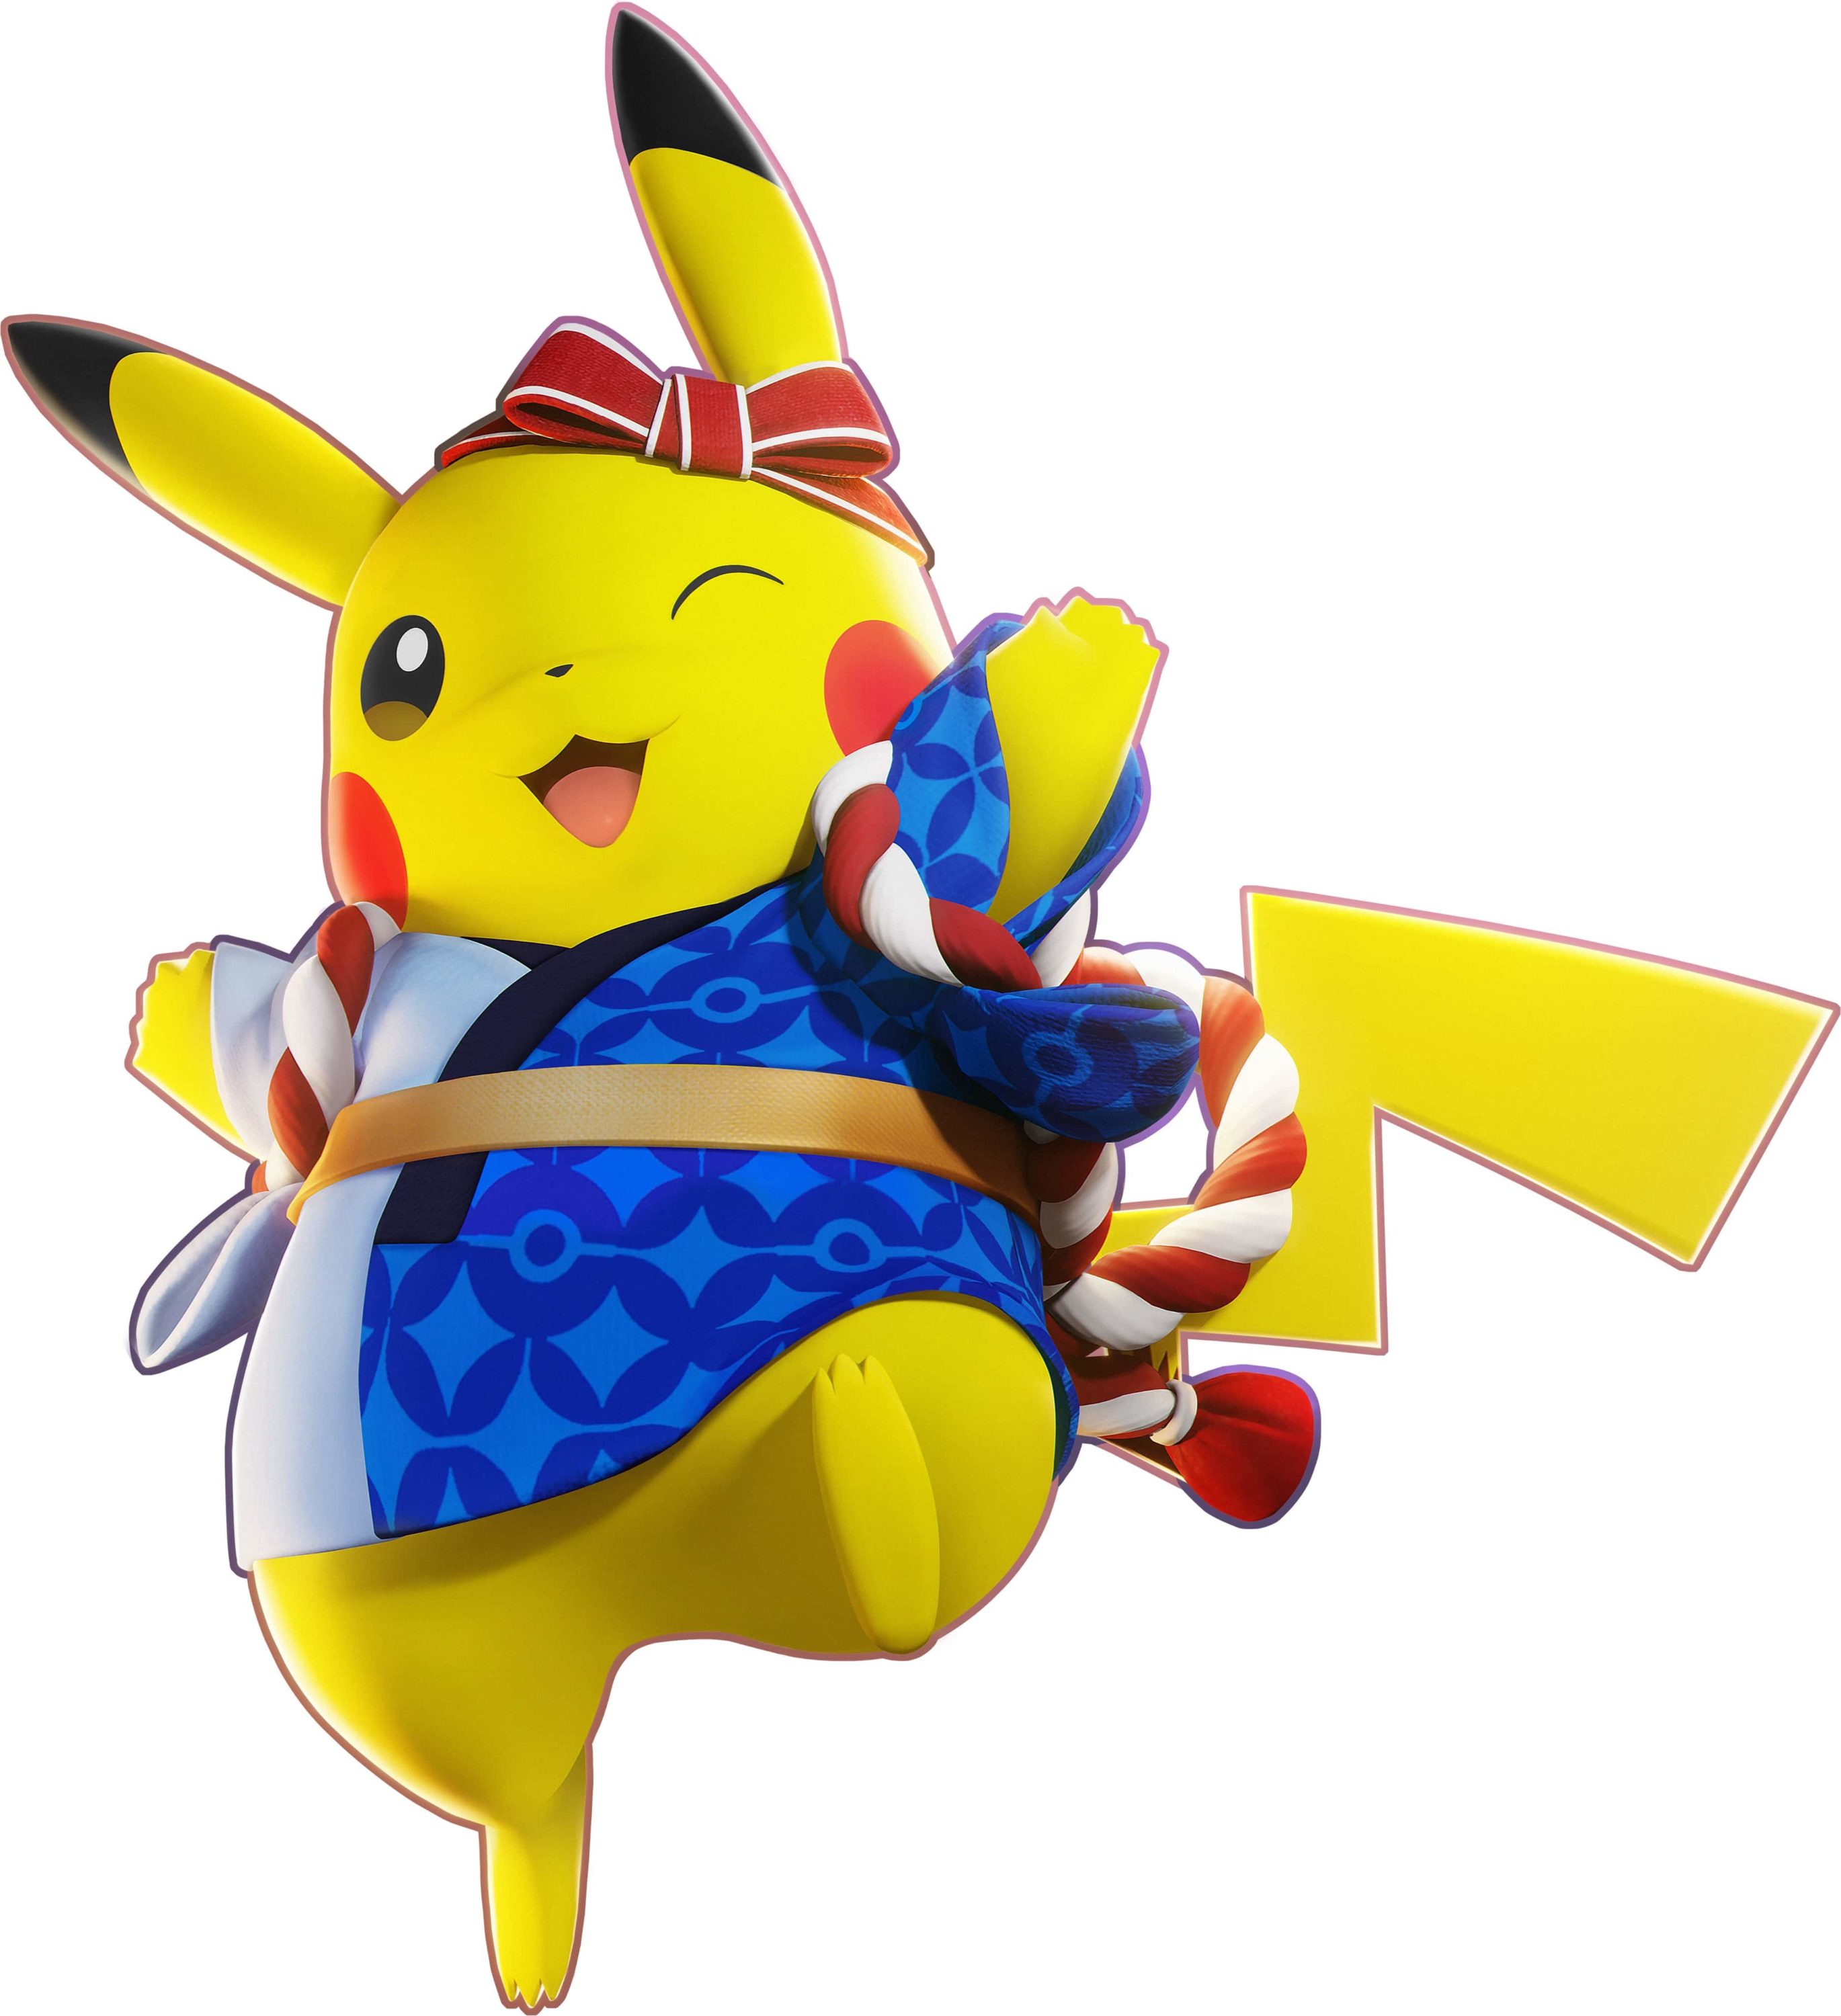 Key art for Festival Style: Pikachu in Pokémon UNITE